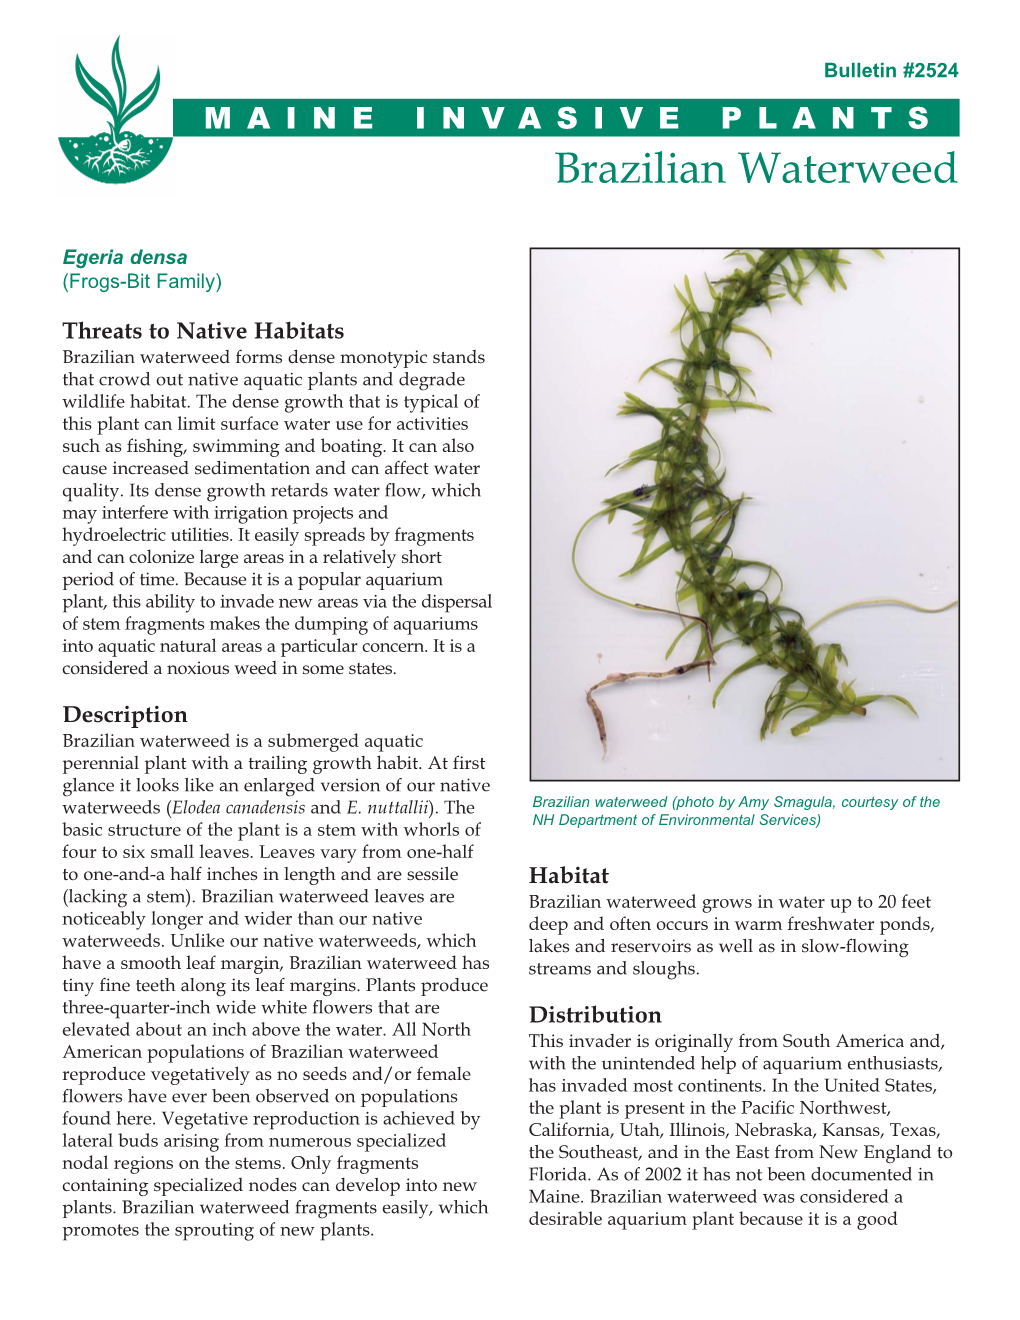 Brazilian Waterweed, Egeria Densa